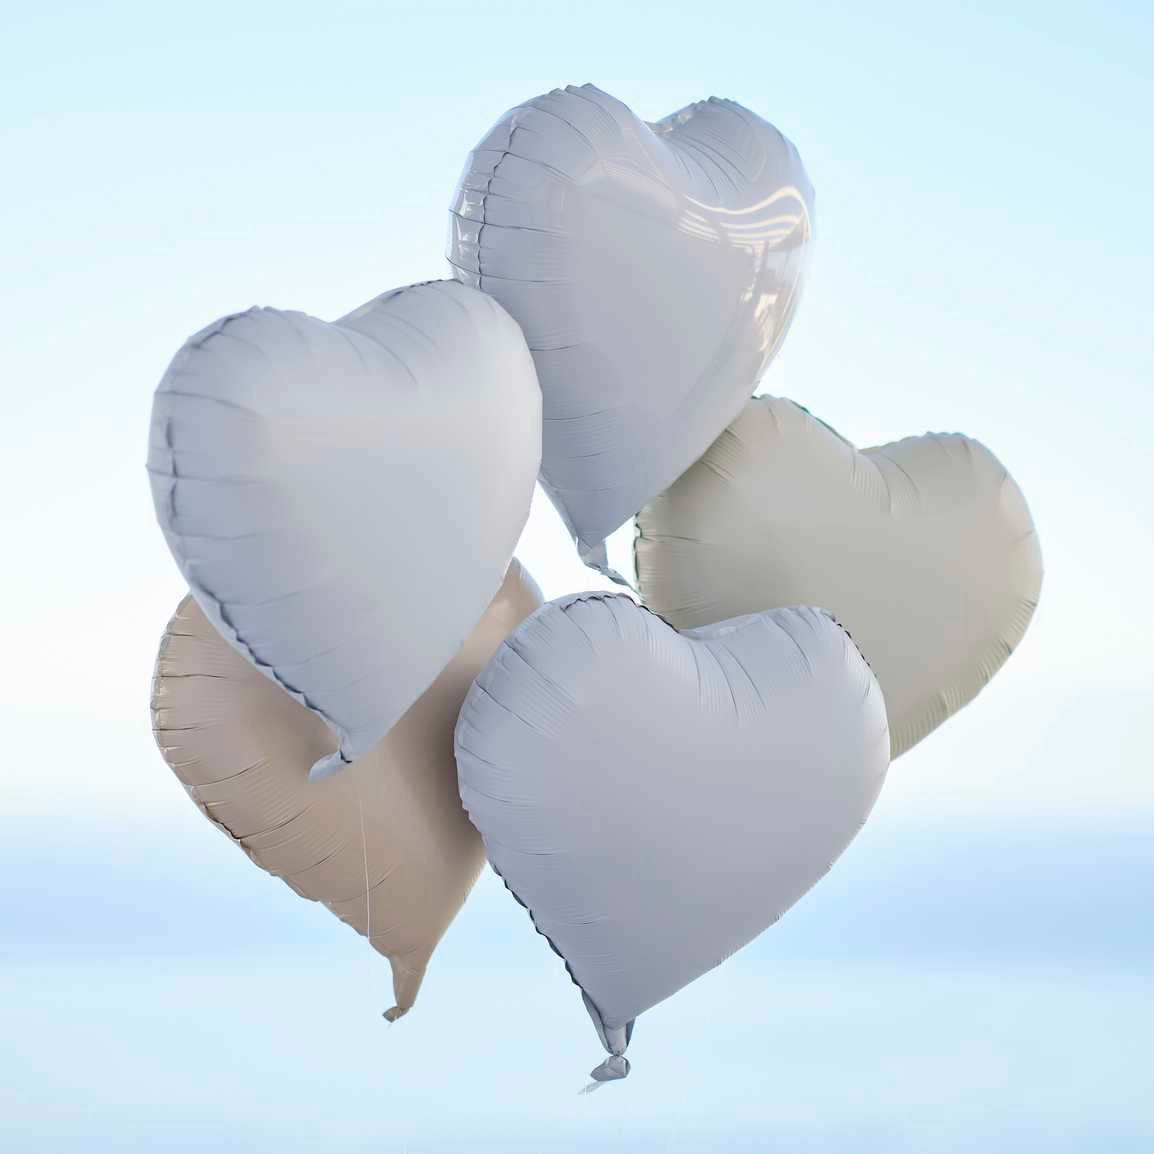 Foiled heart, a bouquet of balloons, 5 pcs